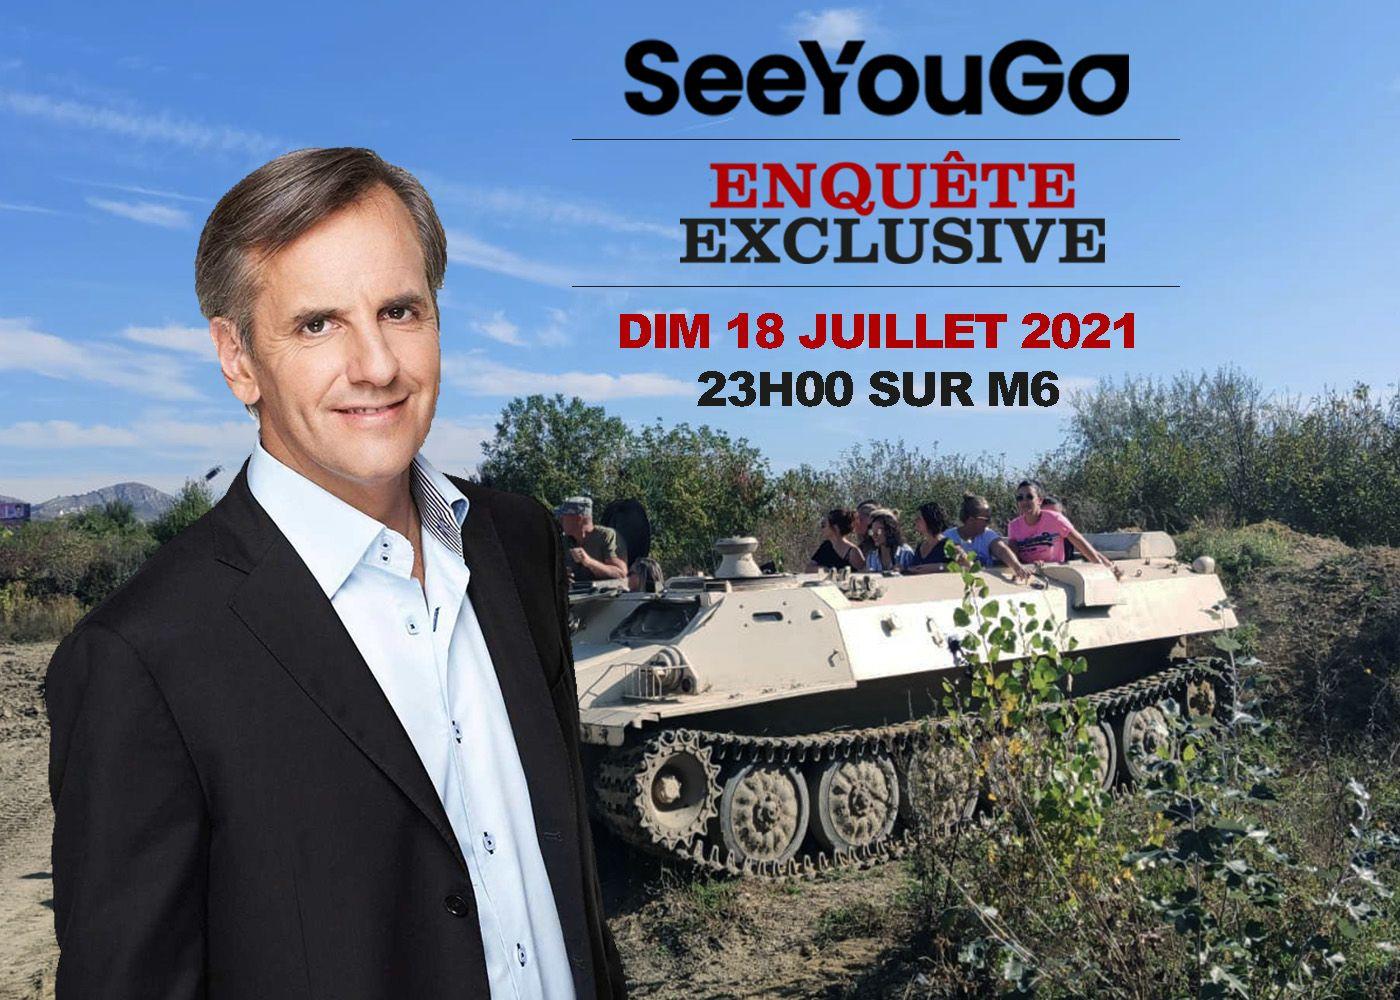 seeyougo-enquete-exclusive-evg-budapest